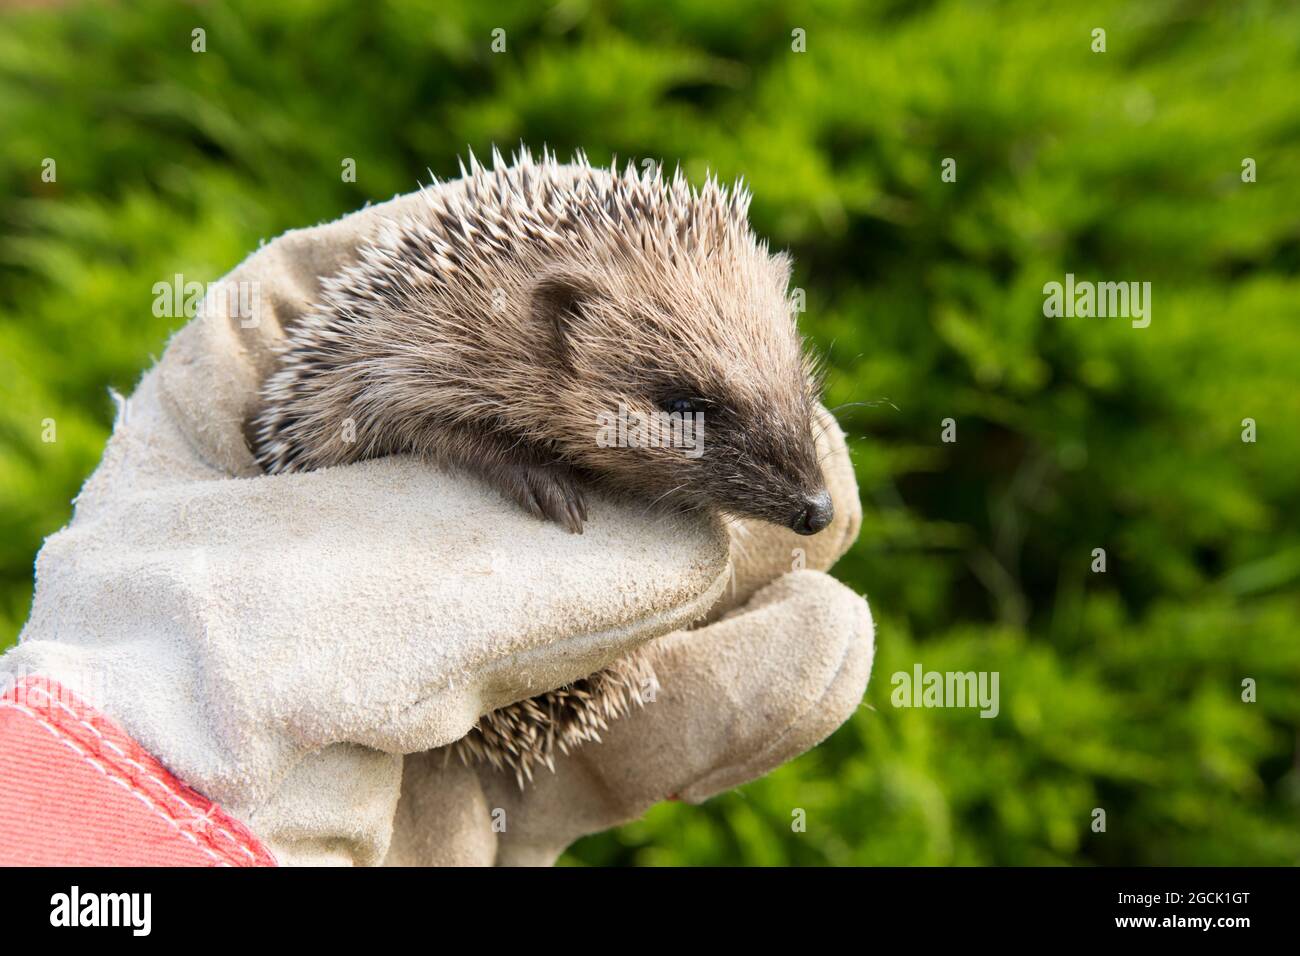 Hedgehog, Erinaceus europaeus, small, unwell, ill, not growing, underweight, held in helpers gloved hand, Sussex, UK, July Stock Photo